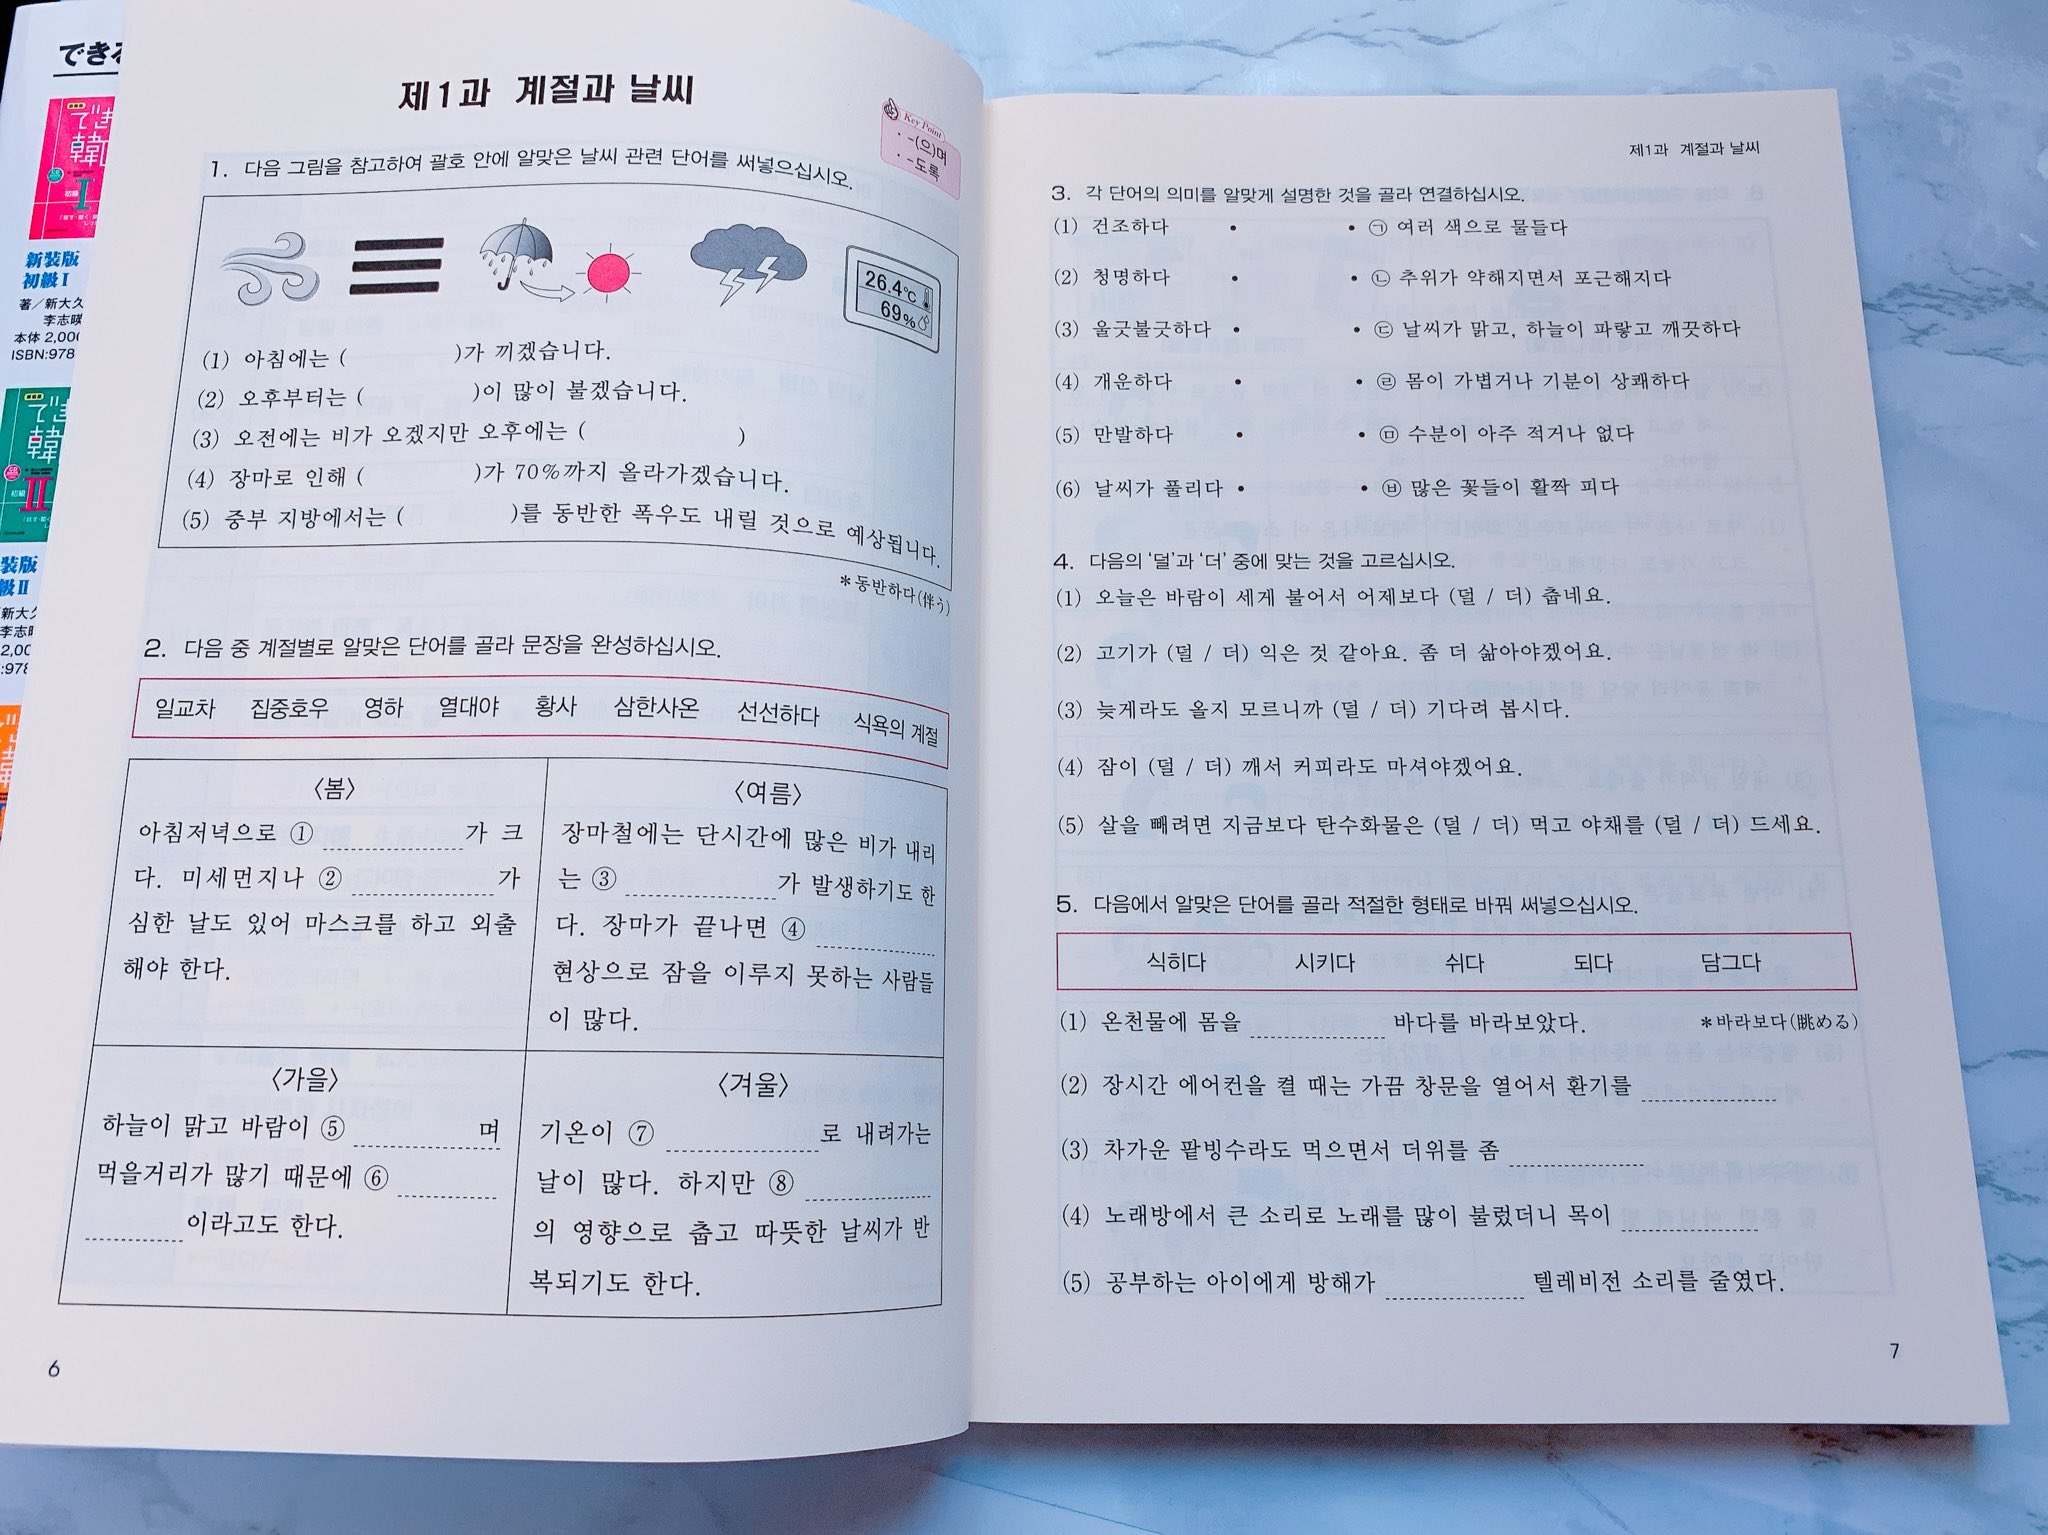 تويتر 韓国語のhana على تويتر 韓国語の新刊情報 できる韓国語 中級 ワークブック Dekiru出版 できる 韓国語の中級 を教材に勉強されてる方はぜひ使ってみてください 問題を解くと理解度が深まりますよ T Co Mof4rpapqm